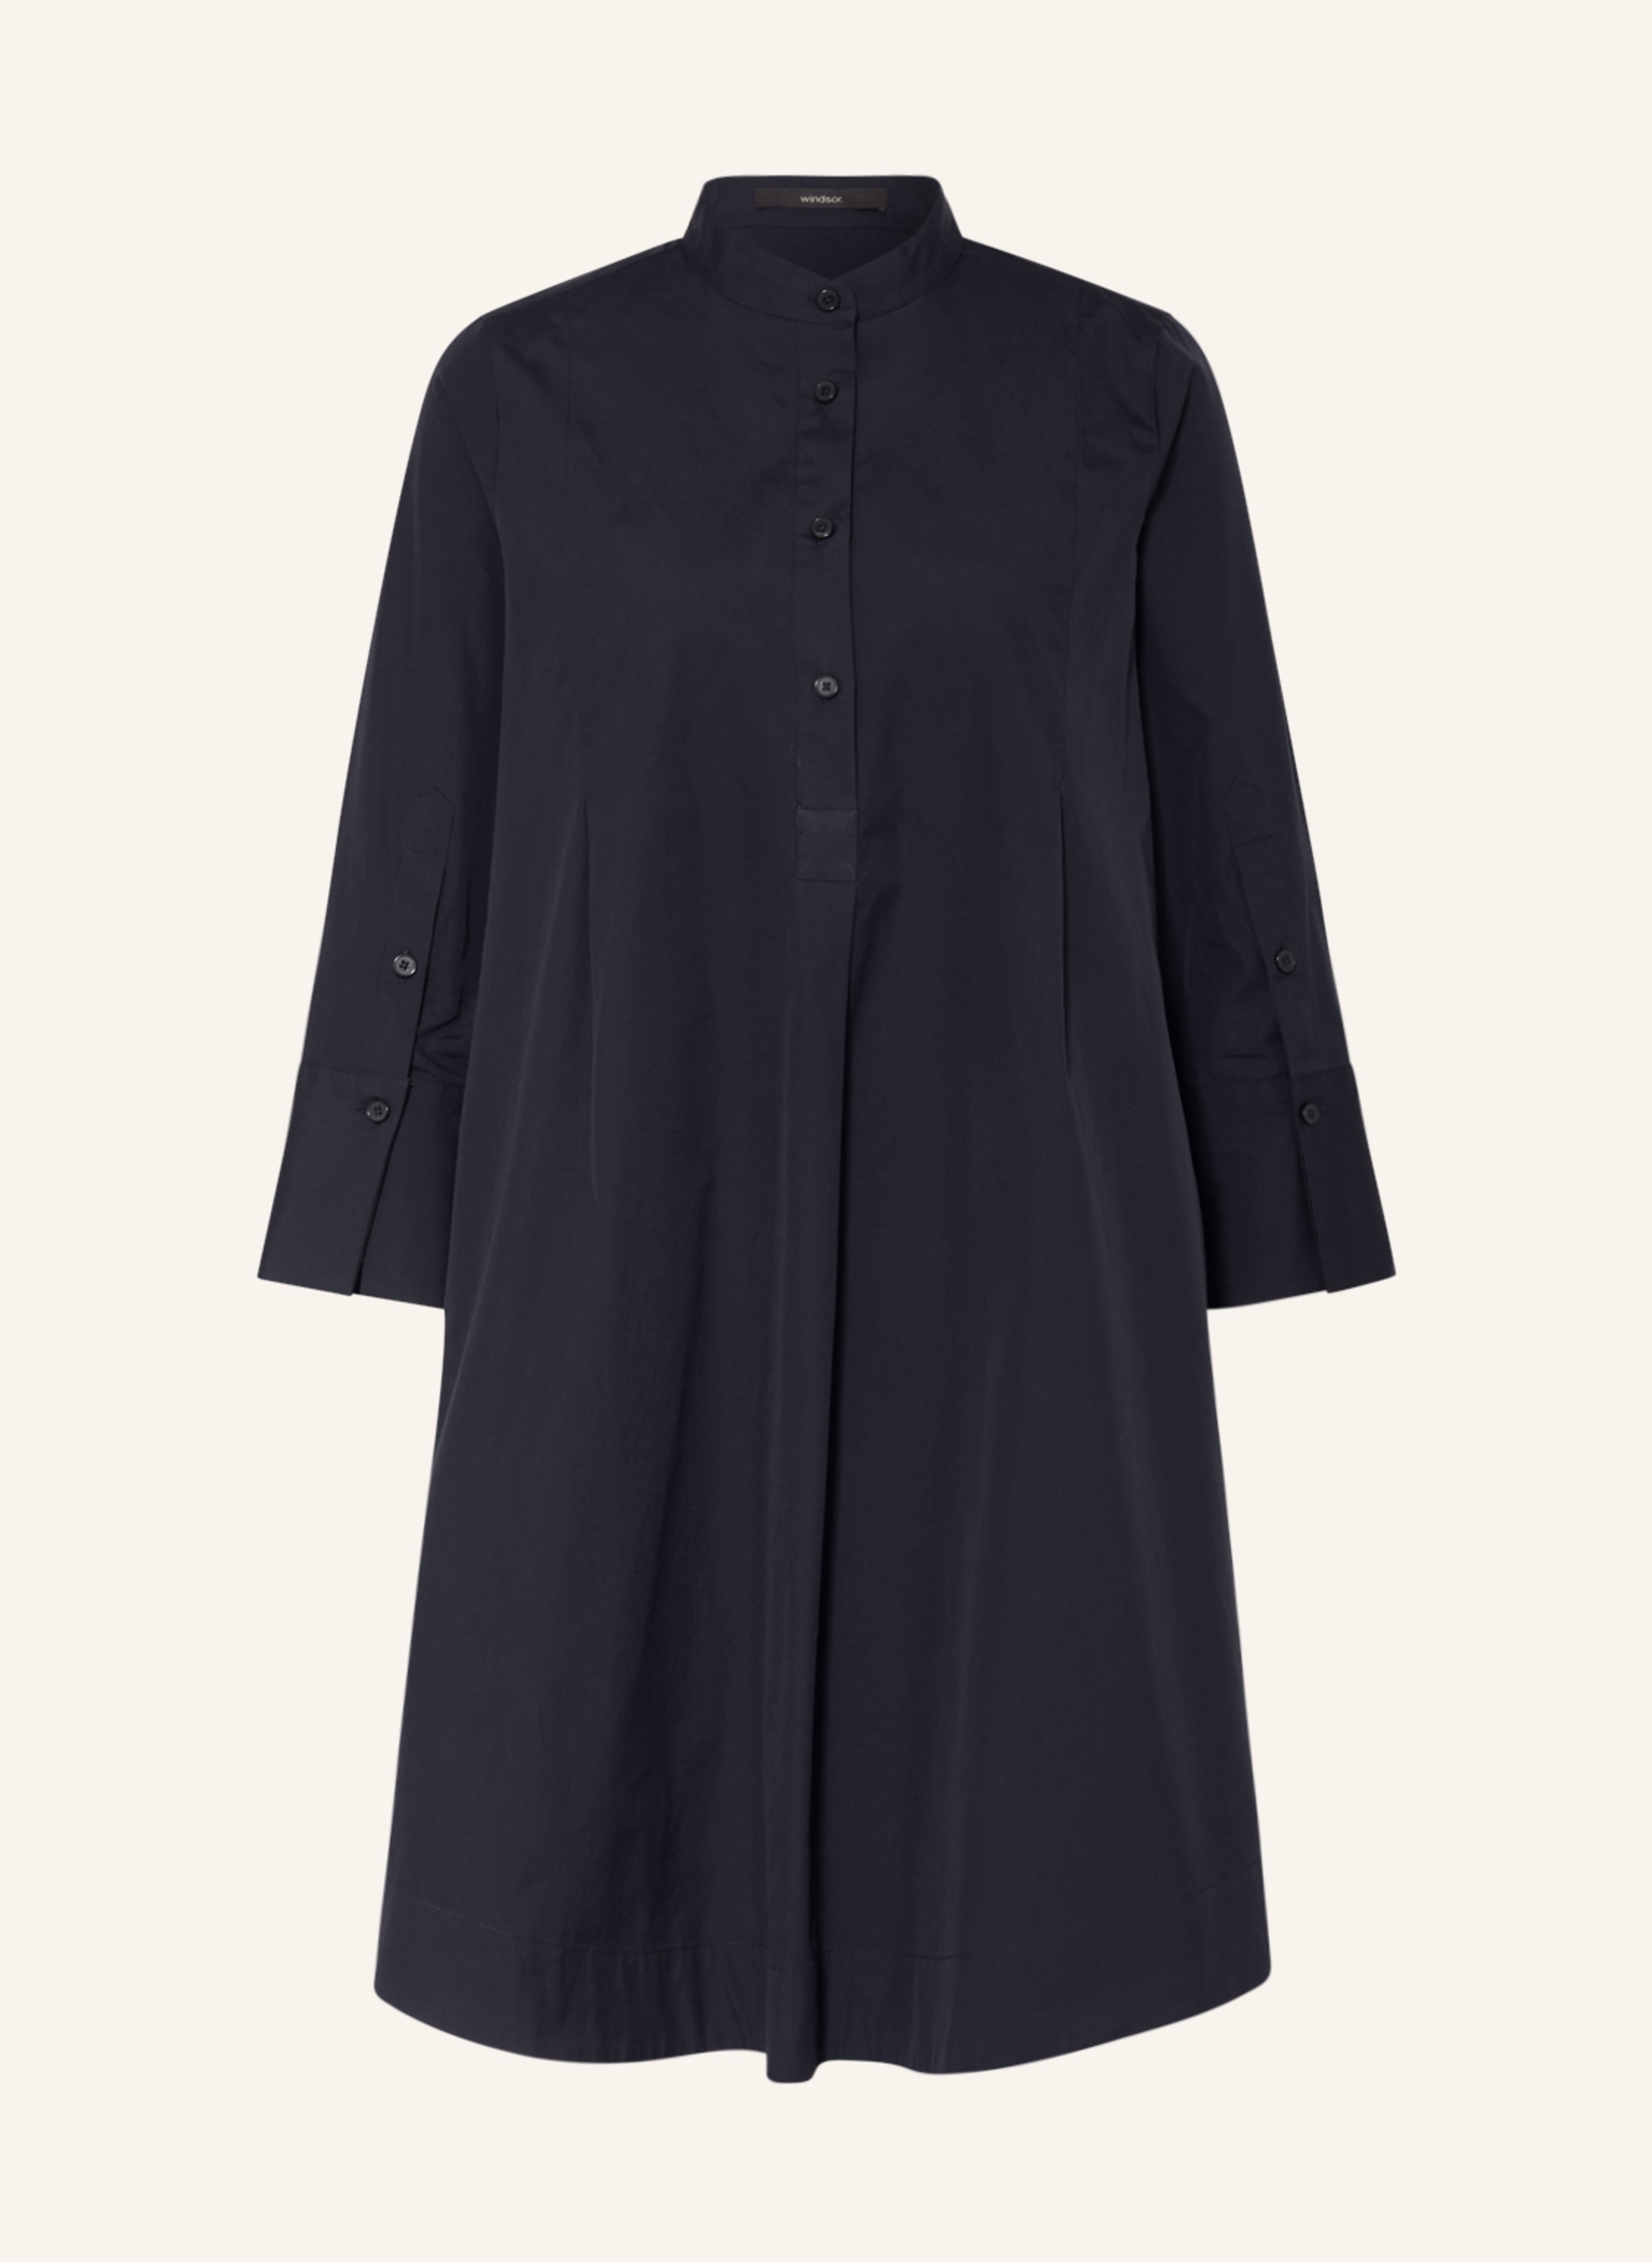 windsor. Dress with 3/4 sleeves in dark blue | Breuninger